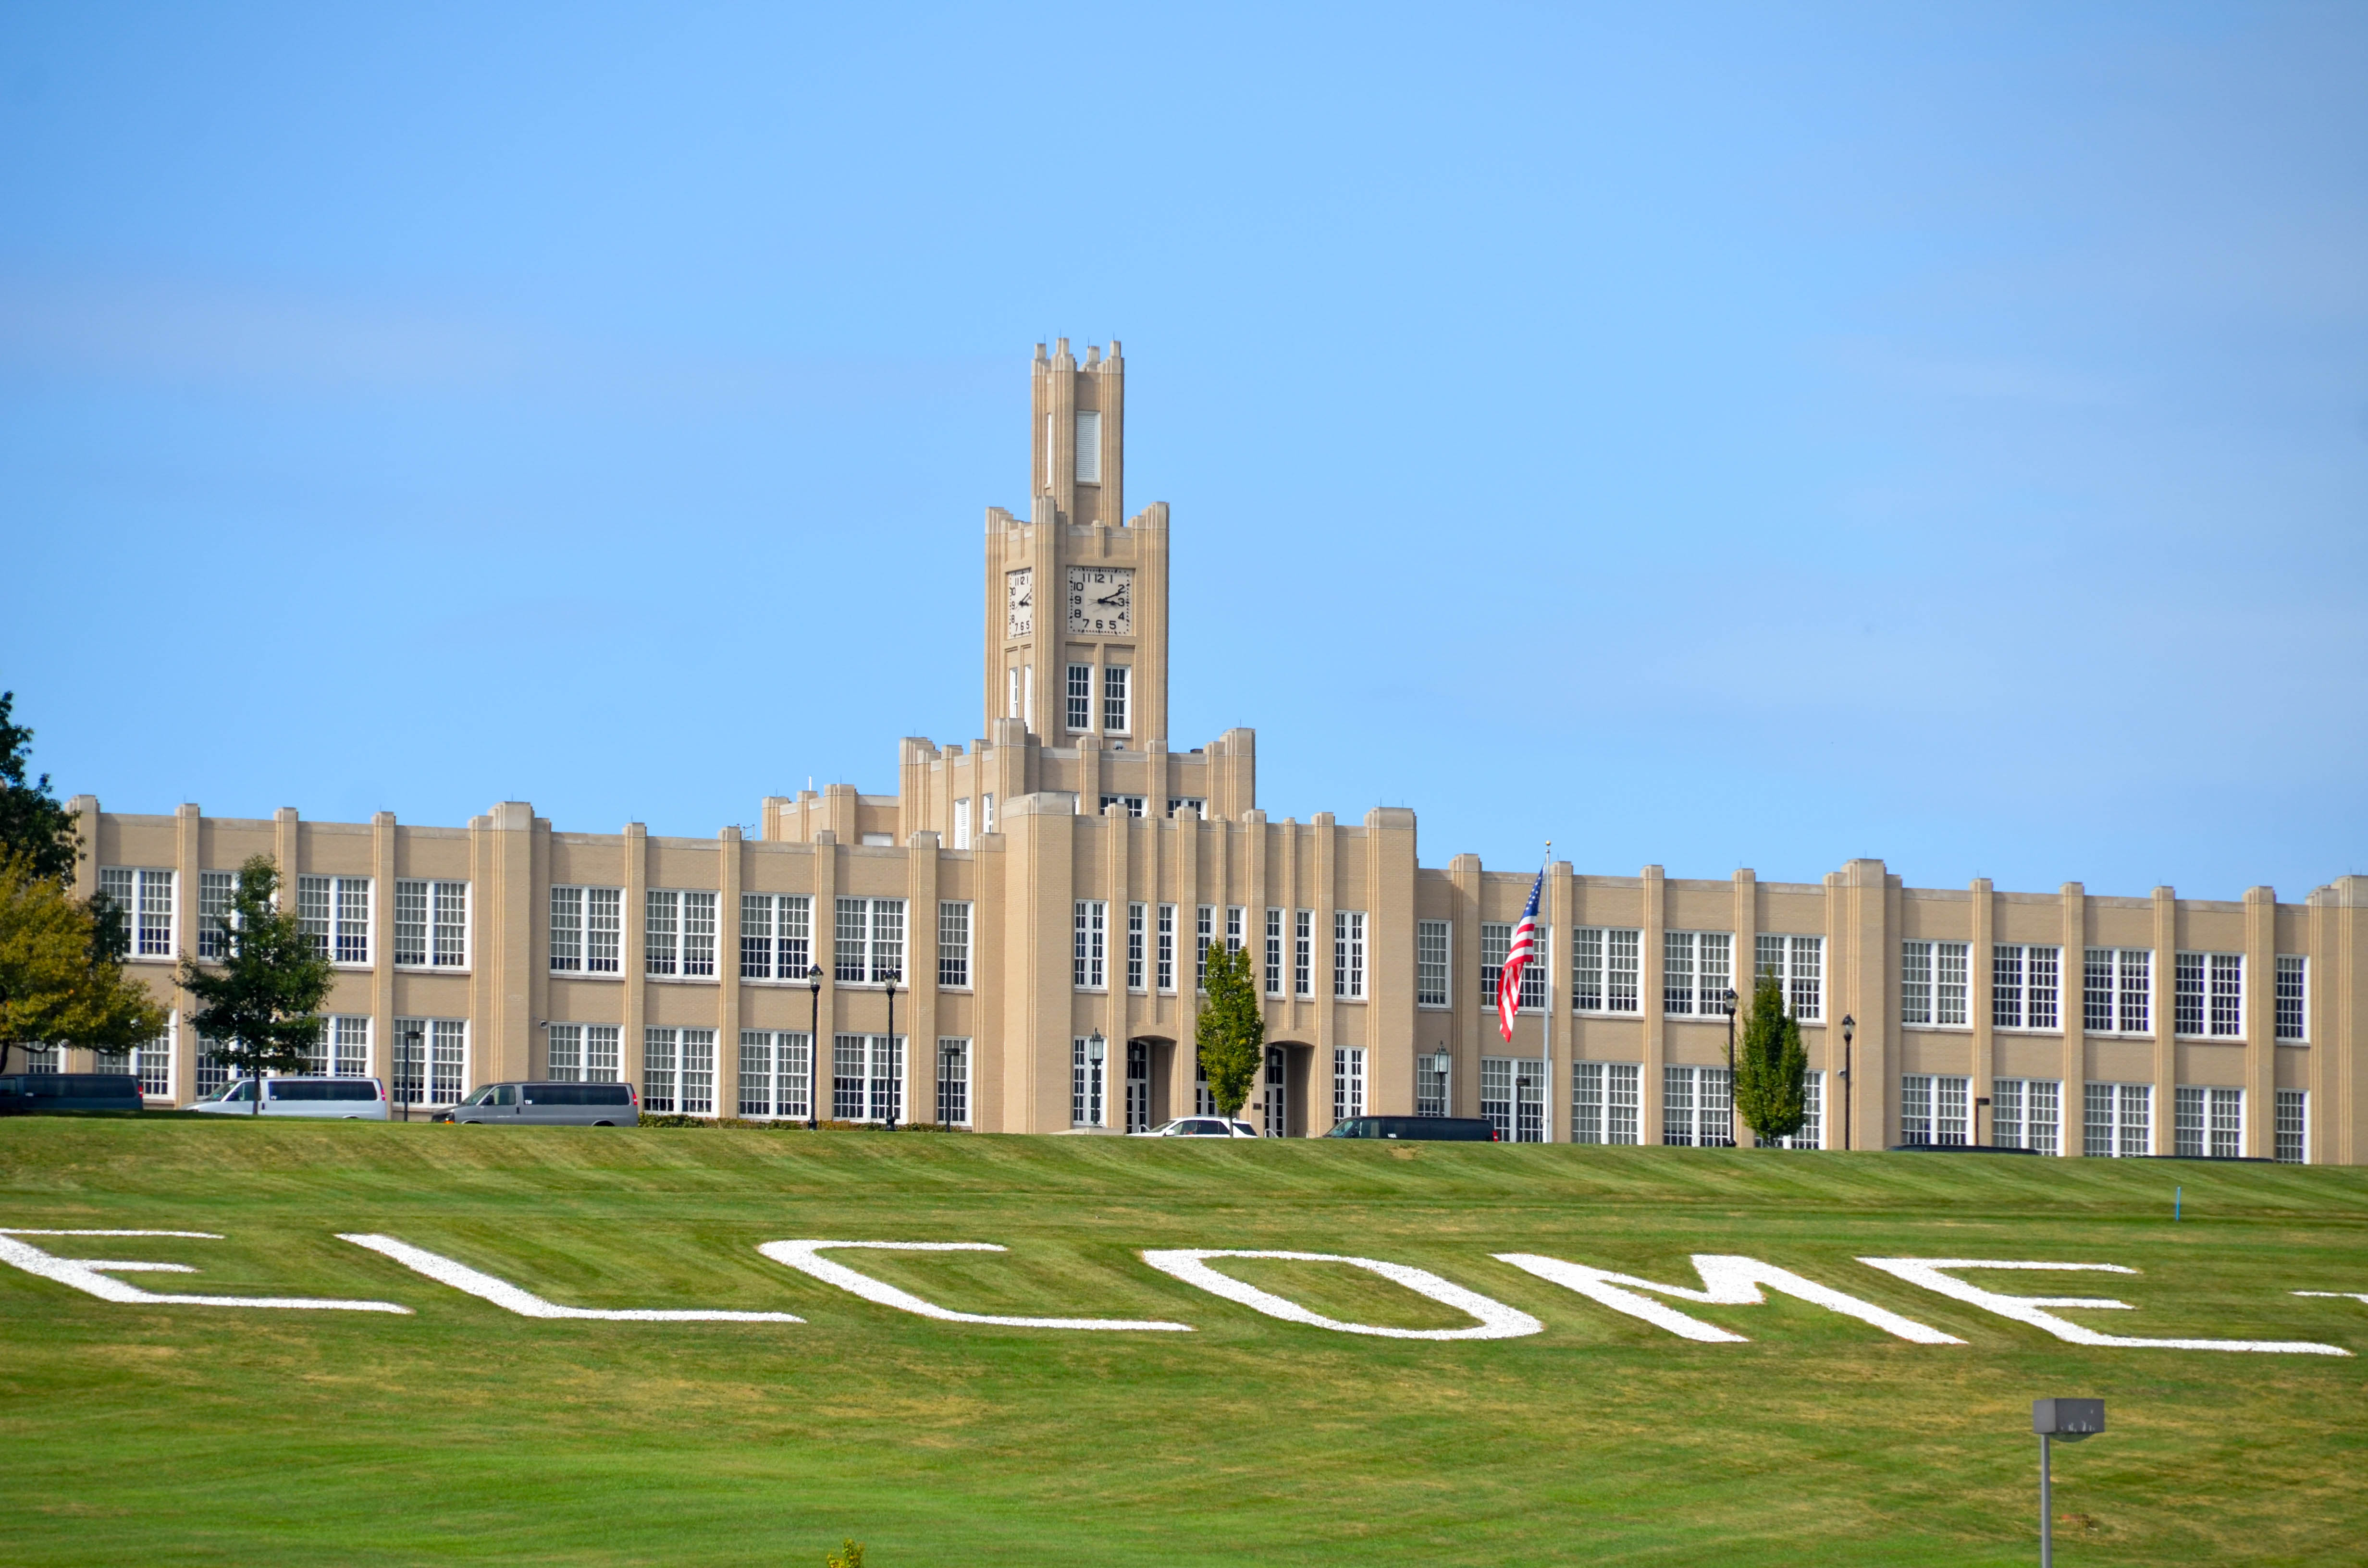 Hershey High School, built by Milton.